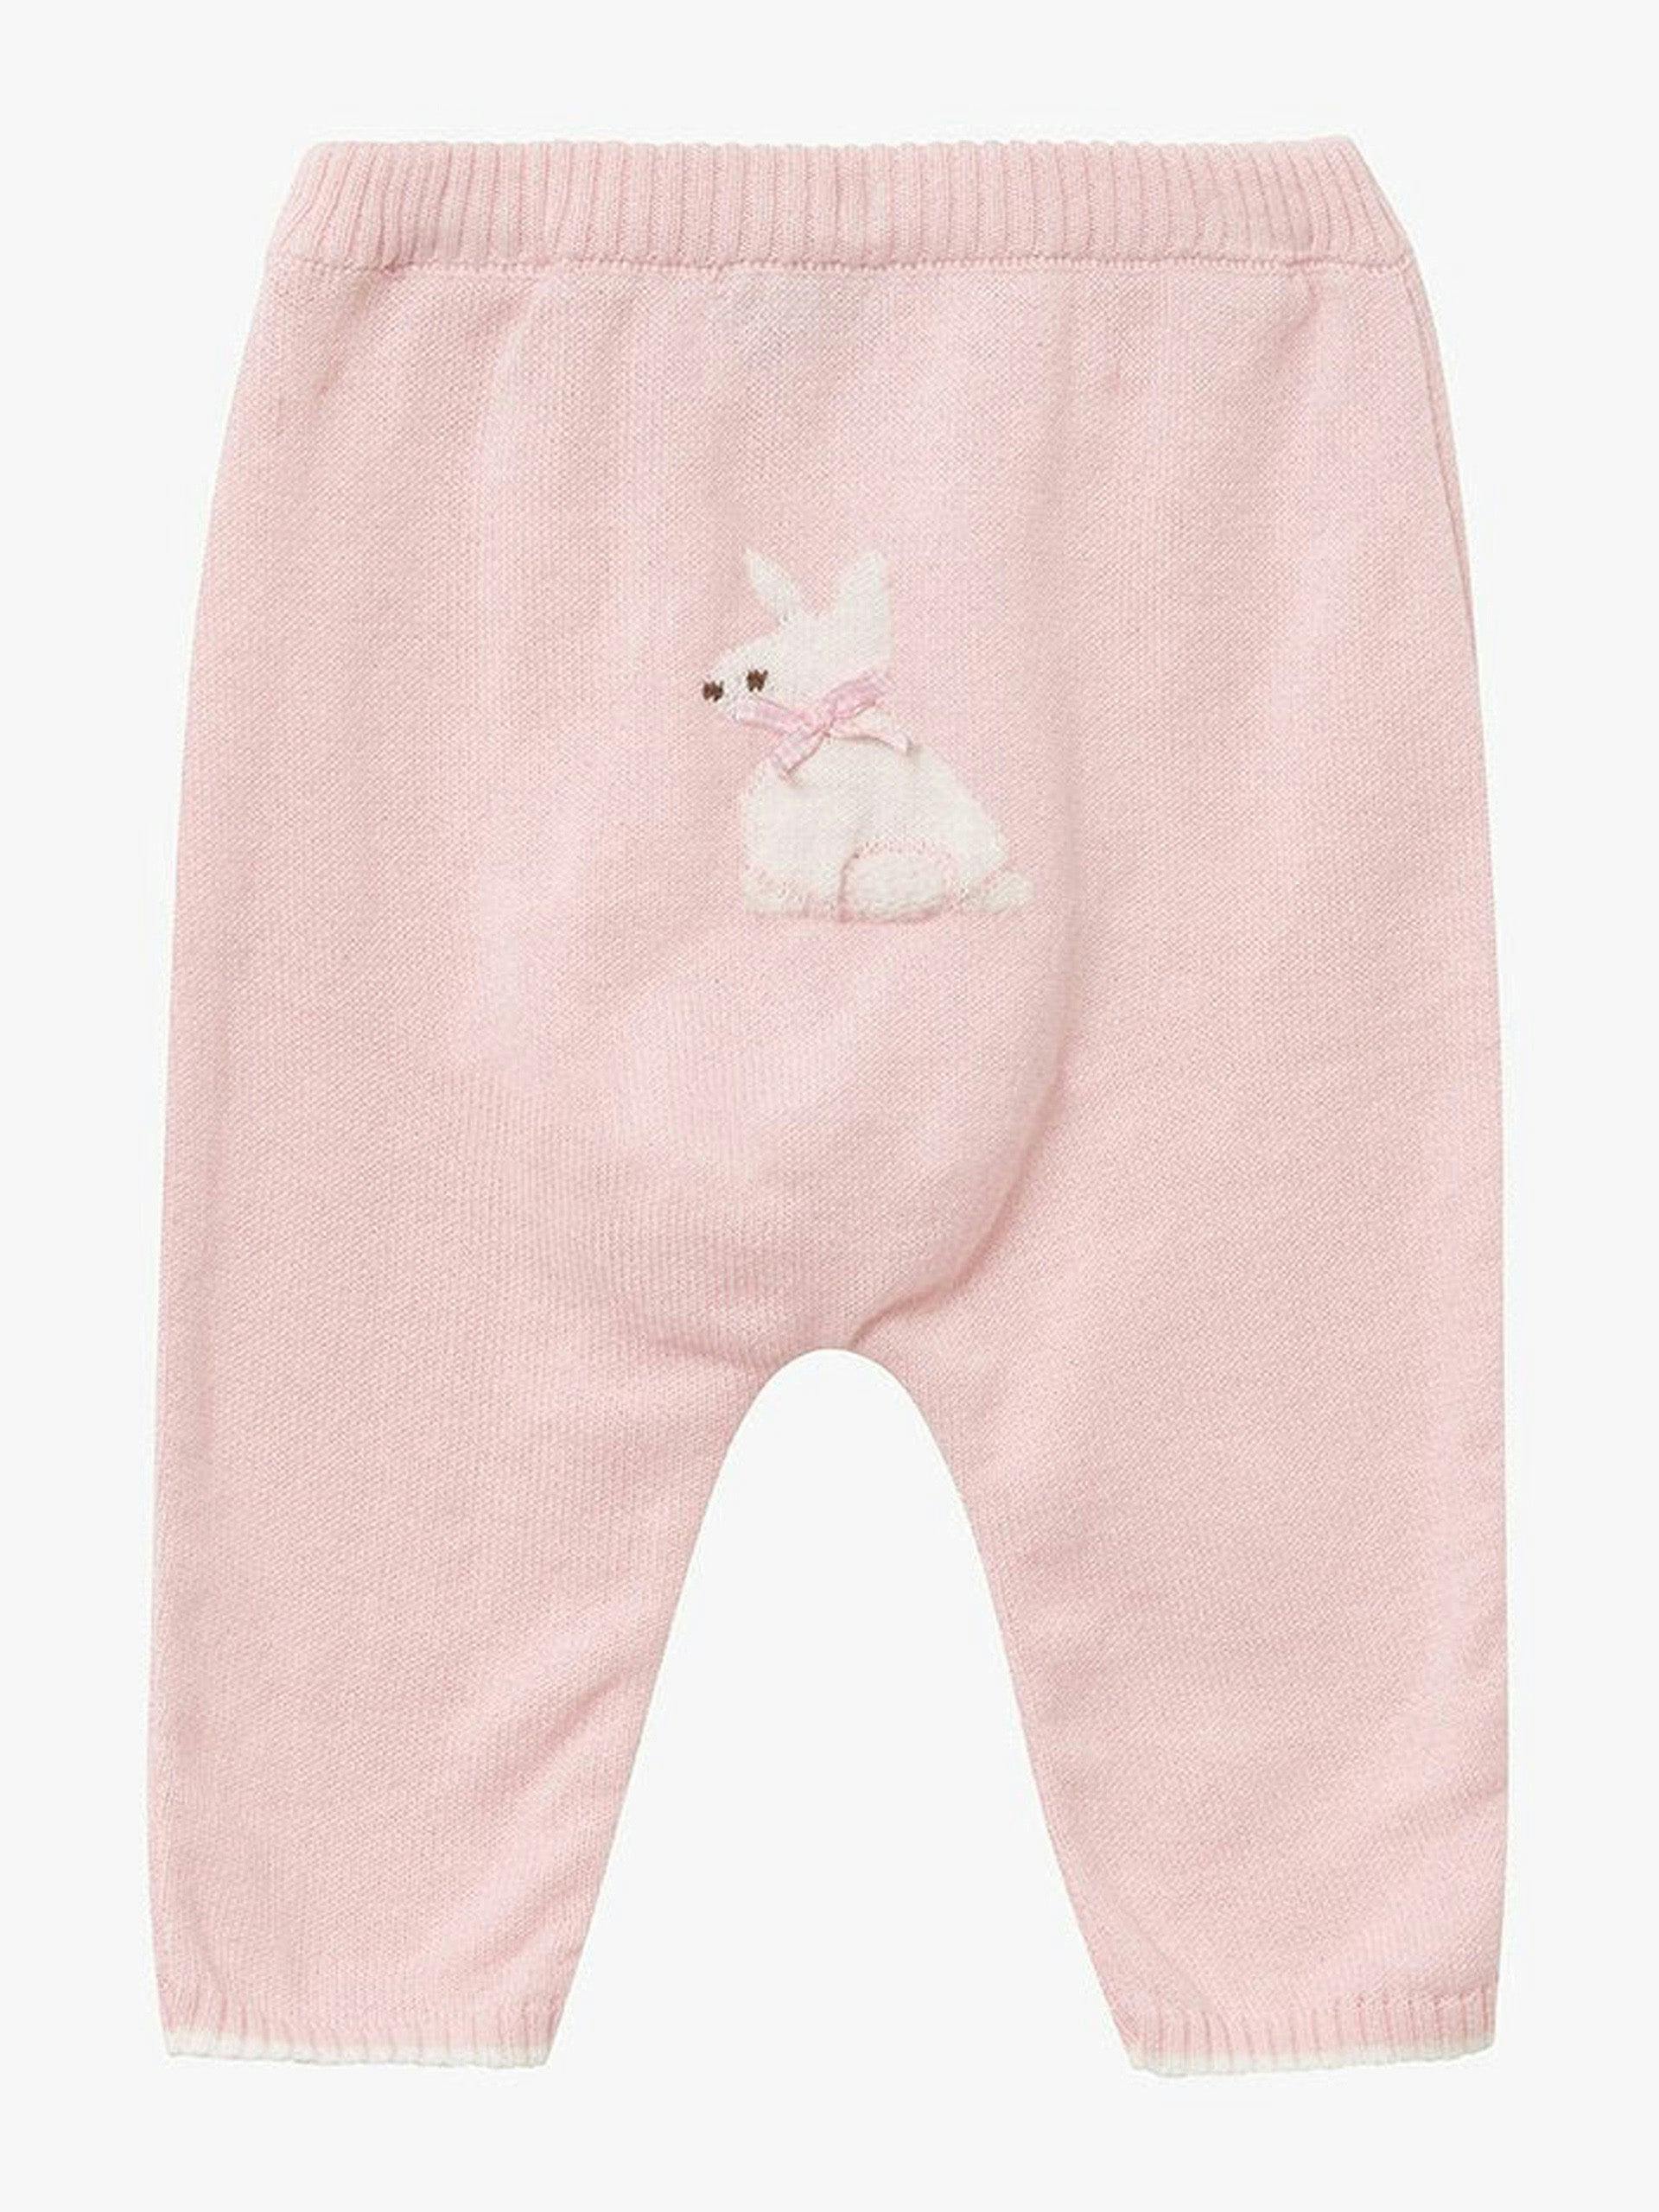 Little Bunny pink cotton leggings